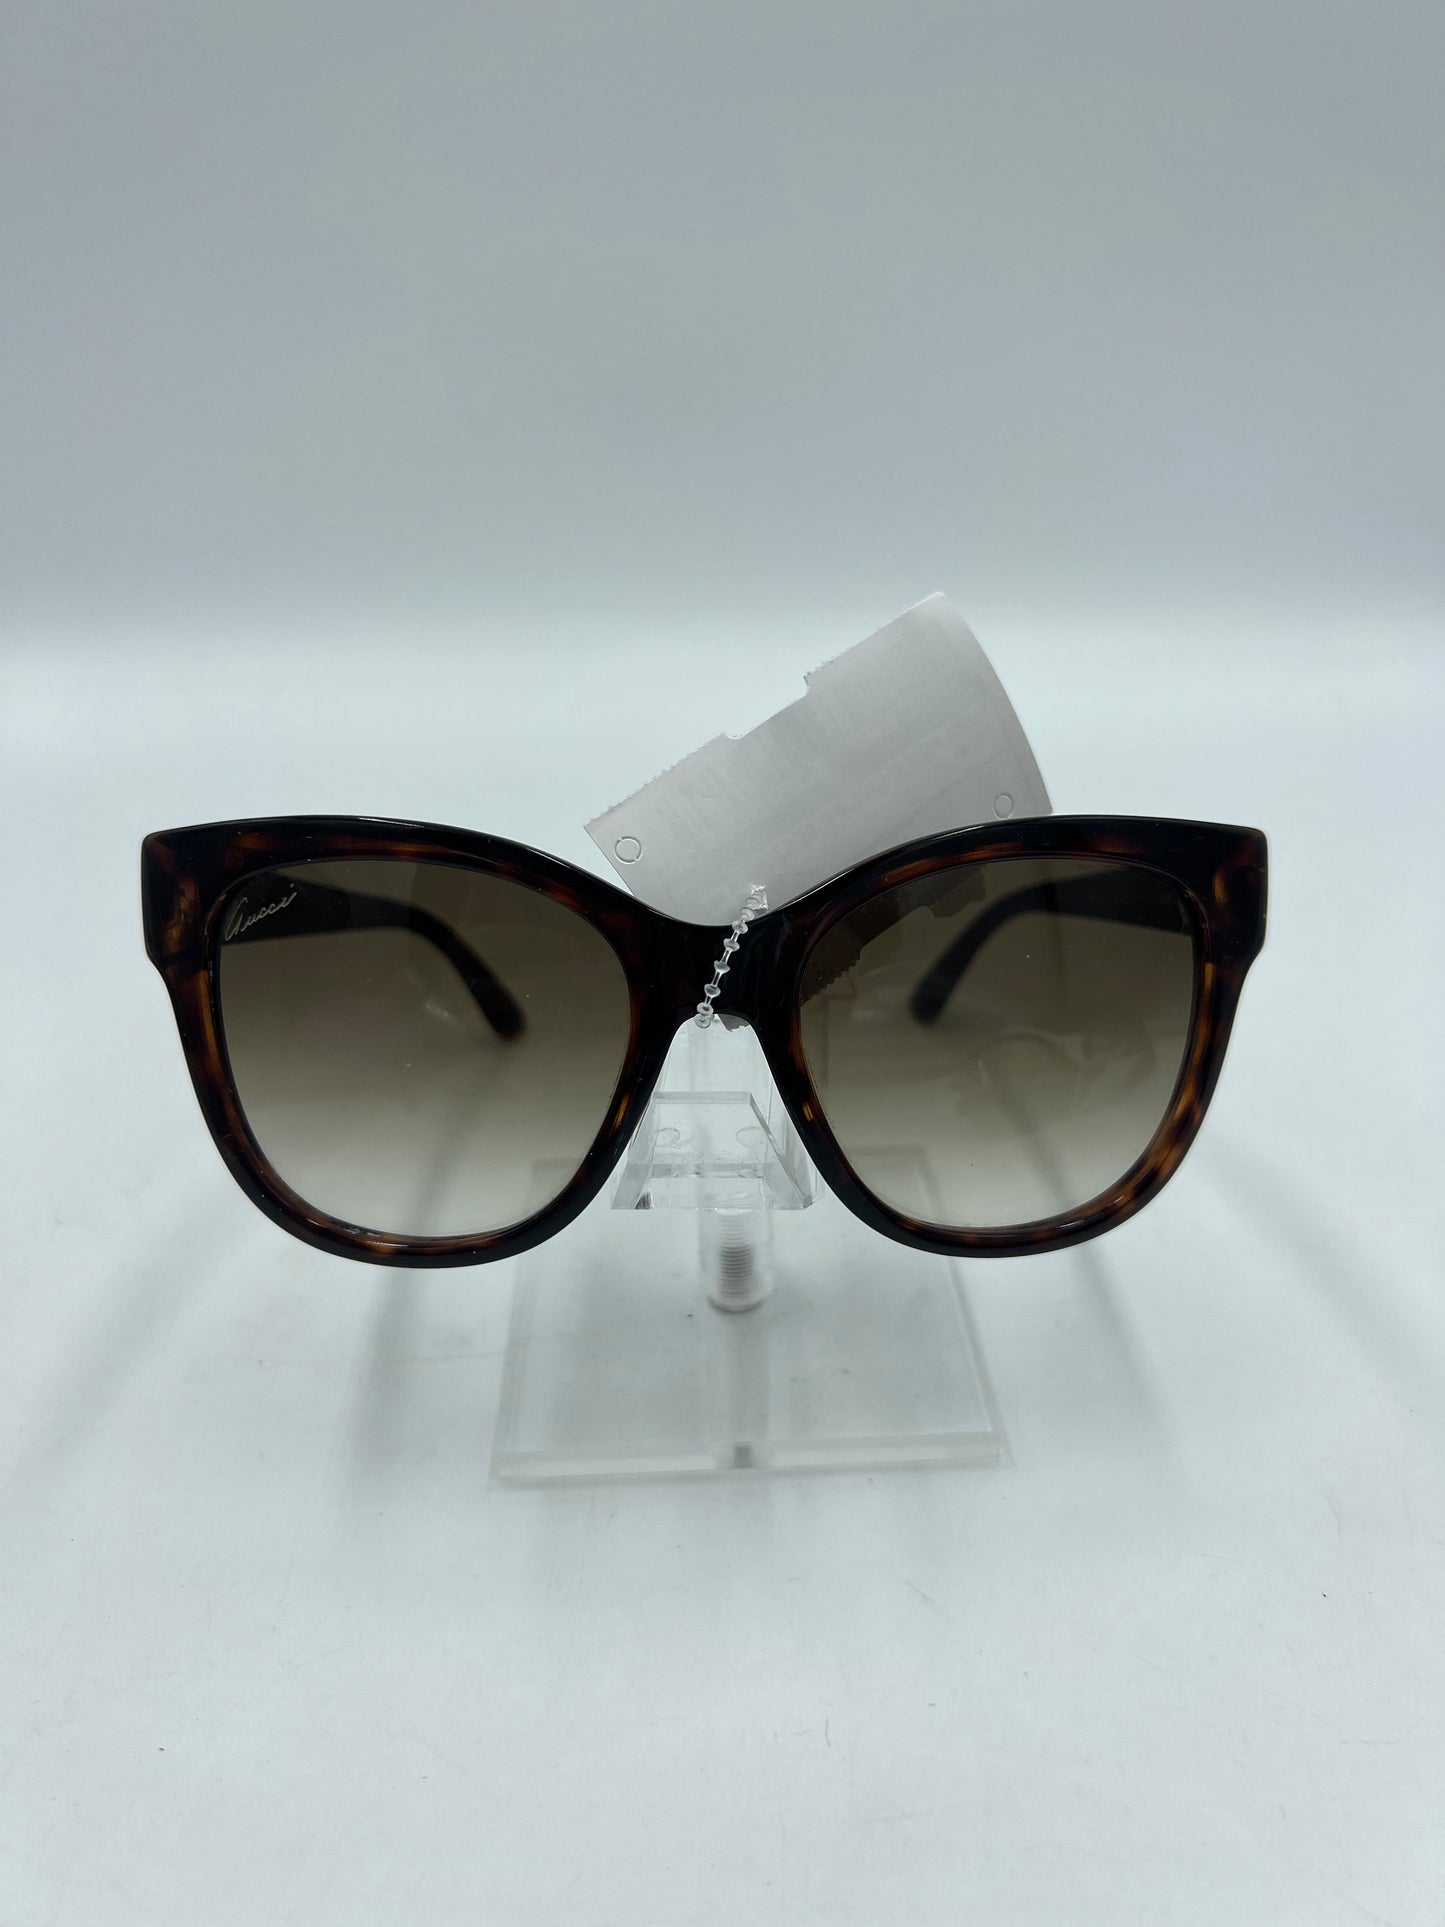 Sunglasses Luxury Designer By Gucci